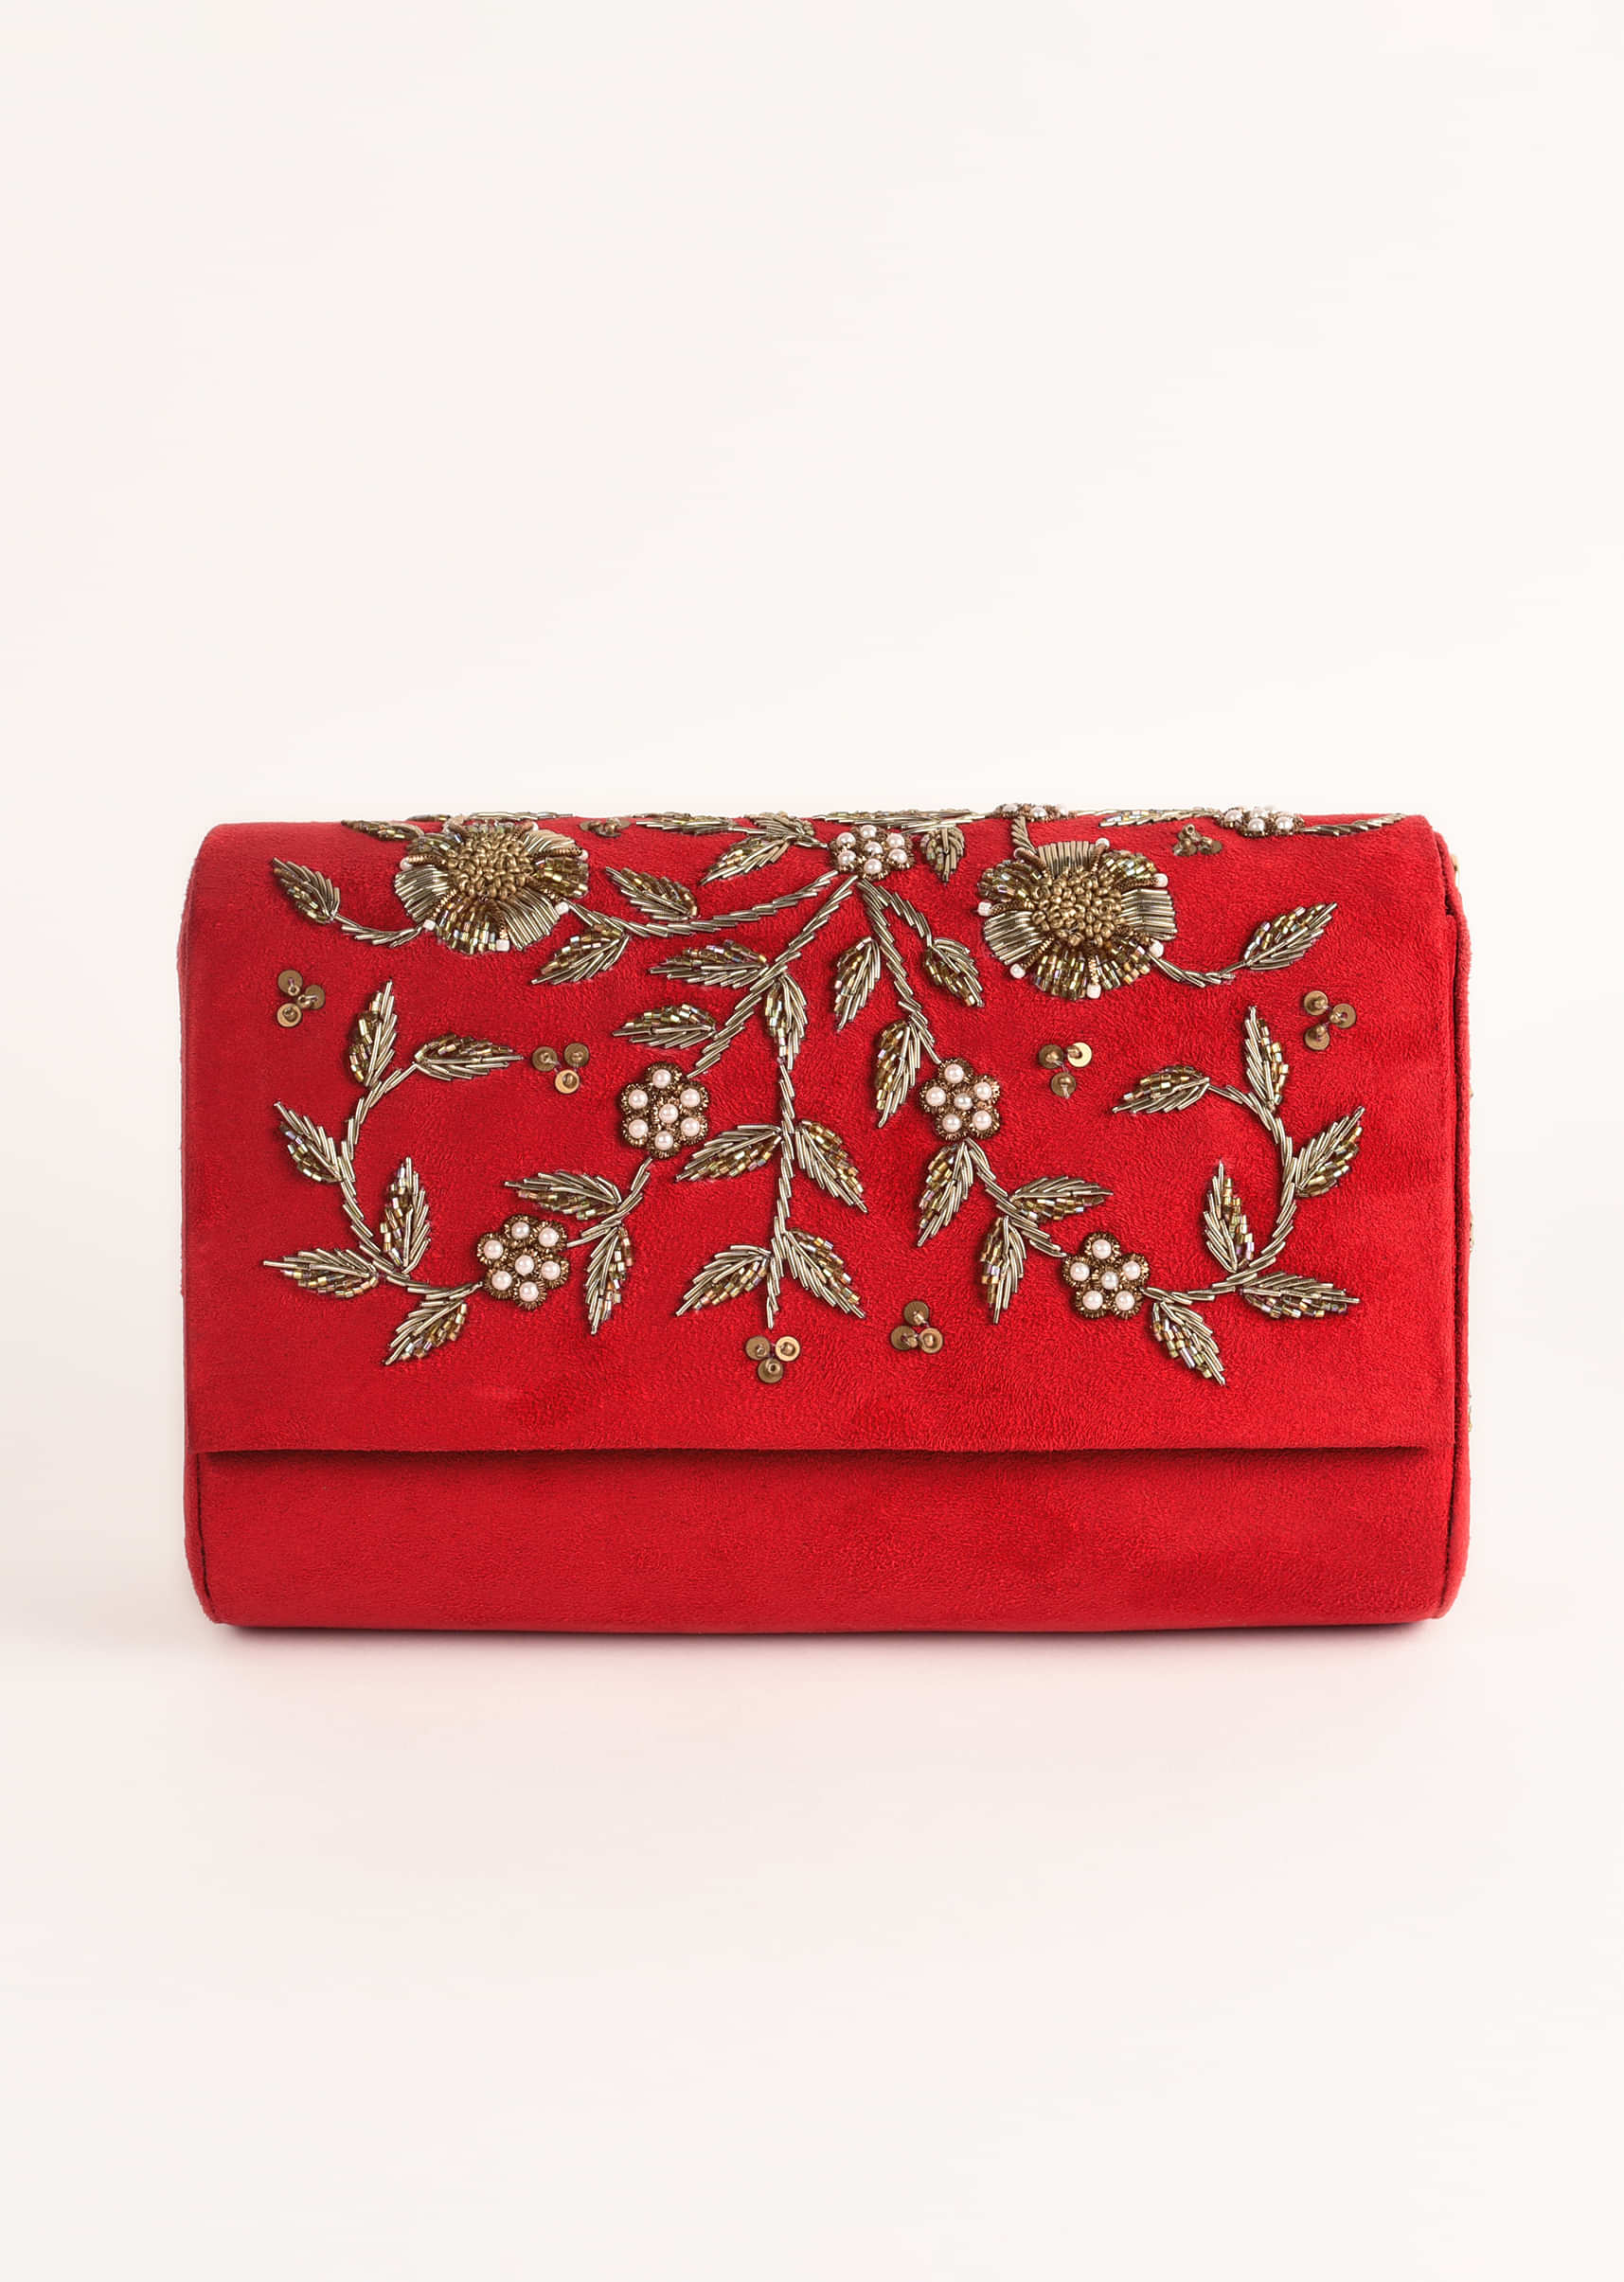 Red Clutch In Suede With Zardosi Embroidered Floral Motifs Online - Kalki Fashion